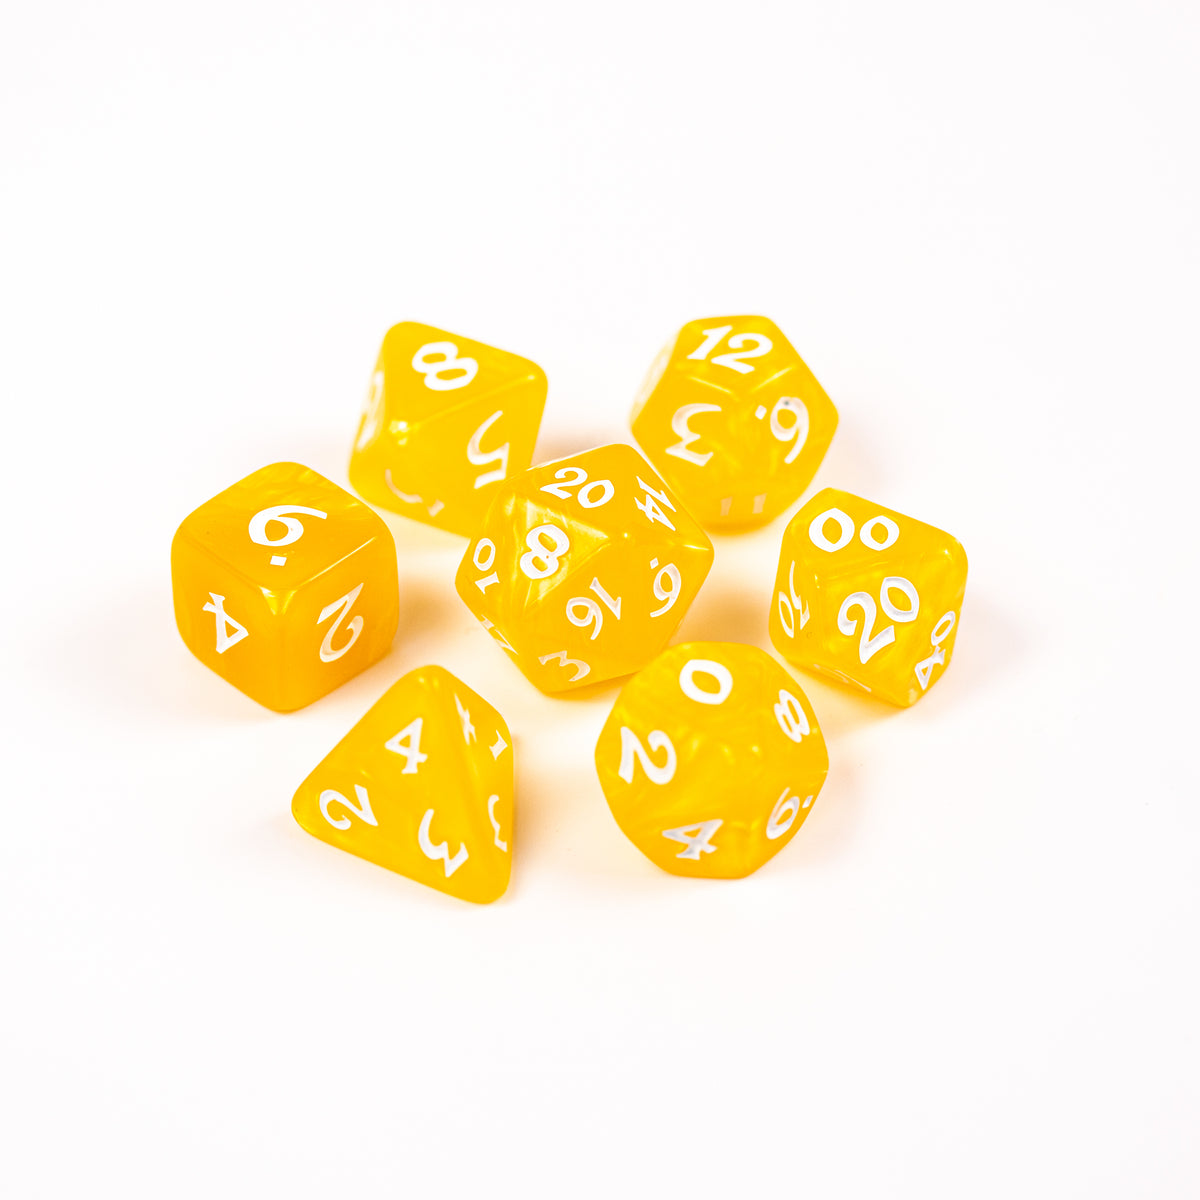 7pc RPG Set - Elessia Essentials - Yellow with White